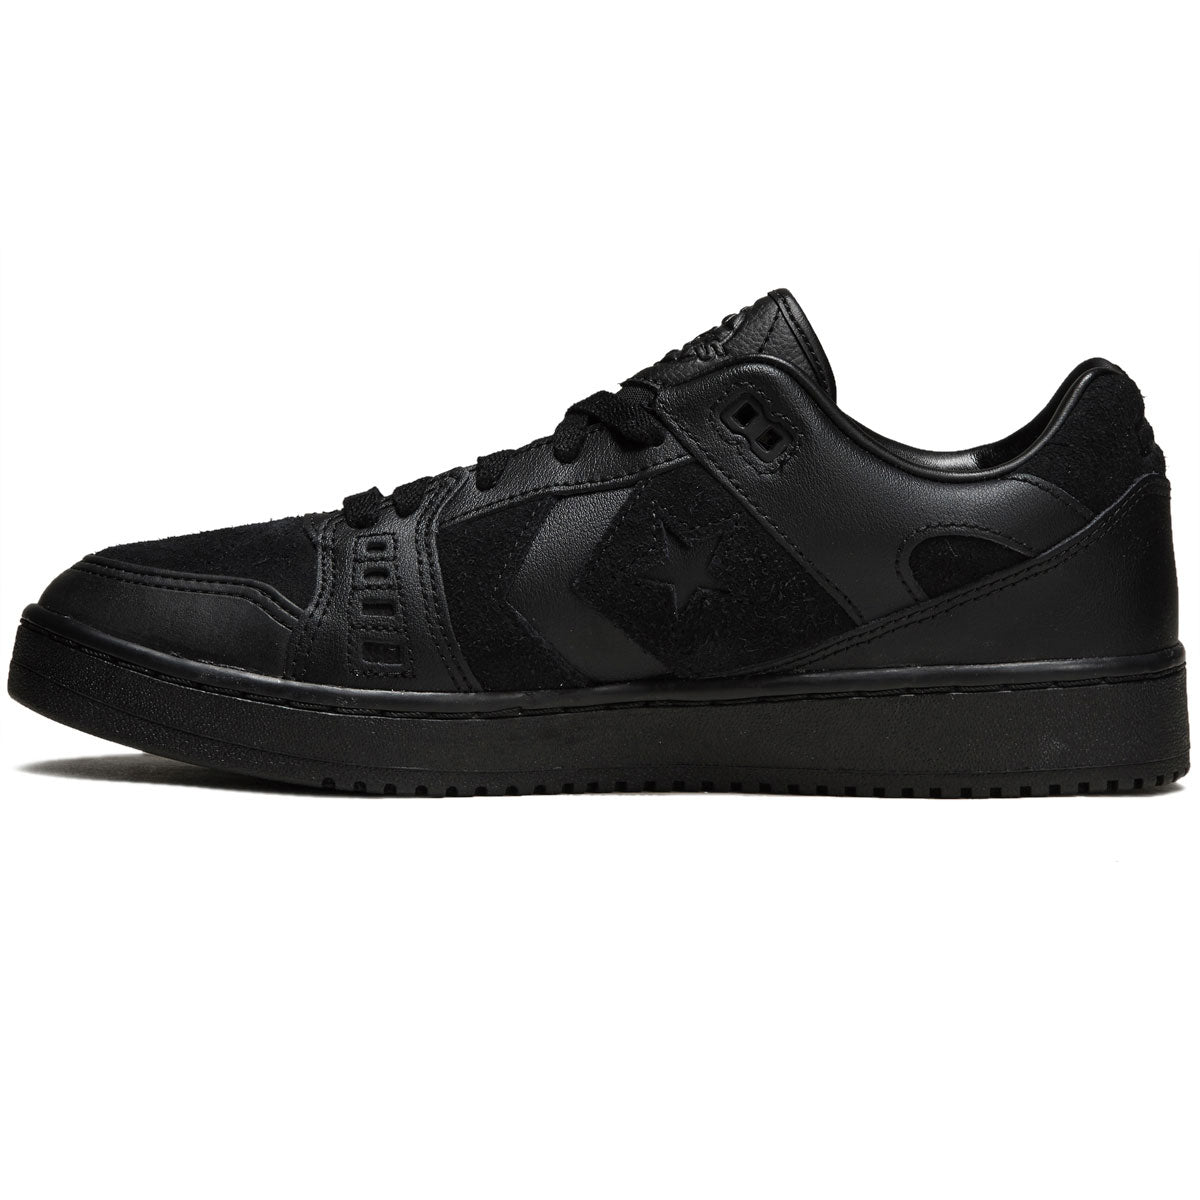 Converse AS-1 Pro Shoes - Black/Black/Black image 2